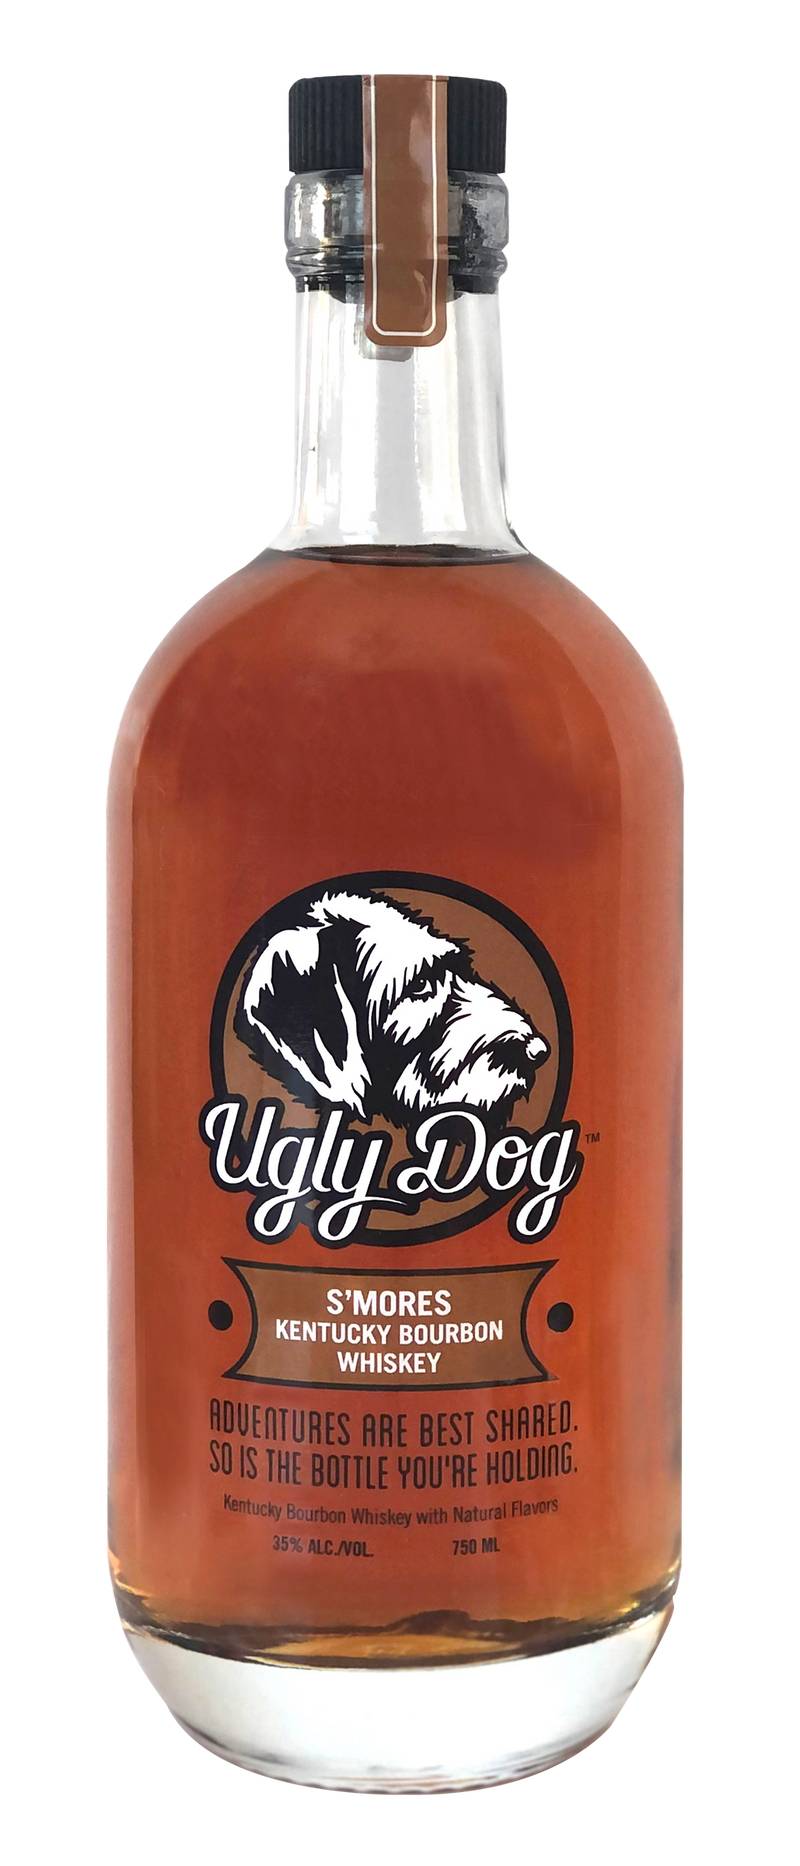 UGLY DOG S'MORES BOURBON Flavored Whiskey BeverageWarehouse